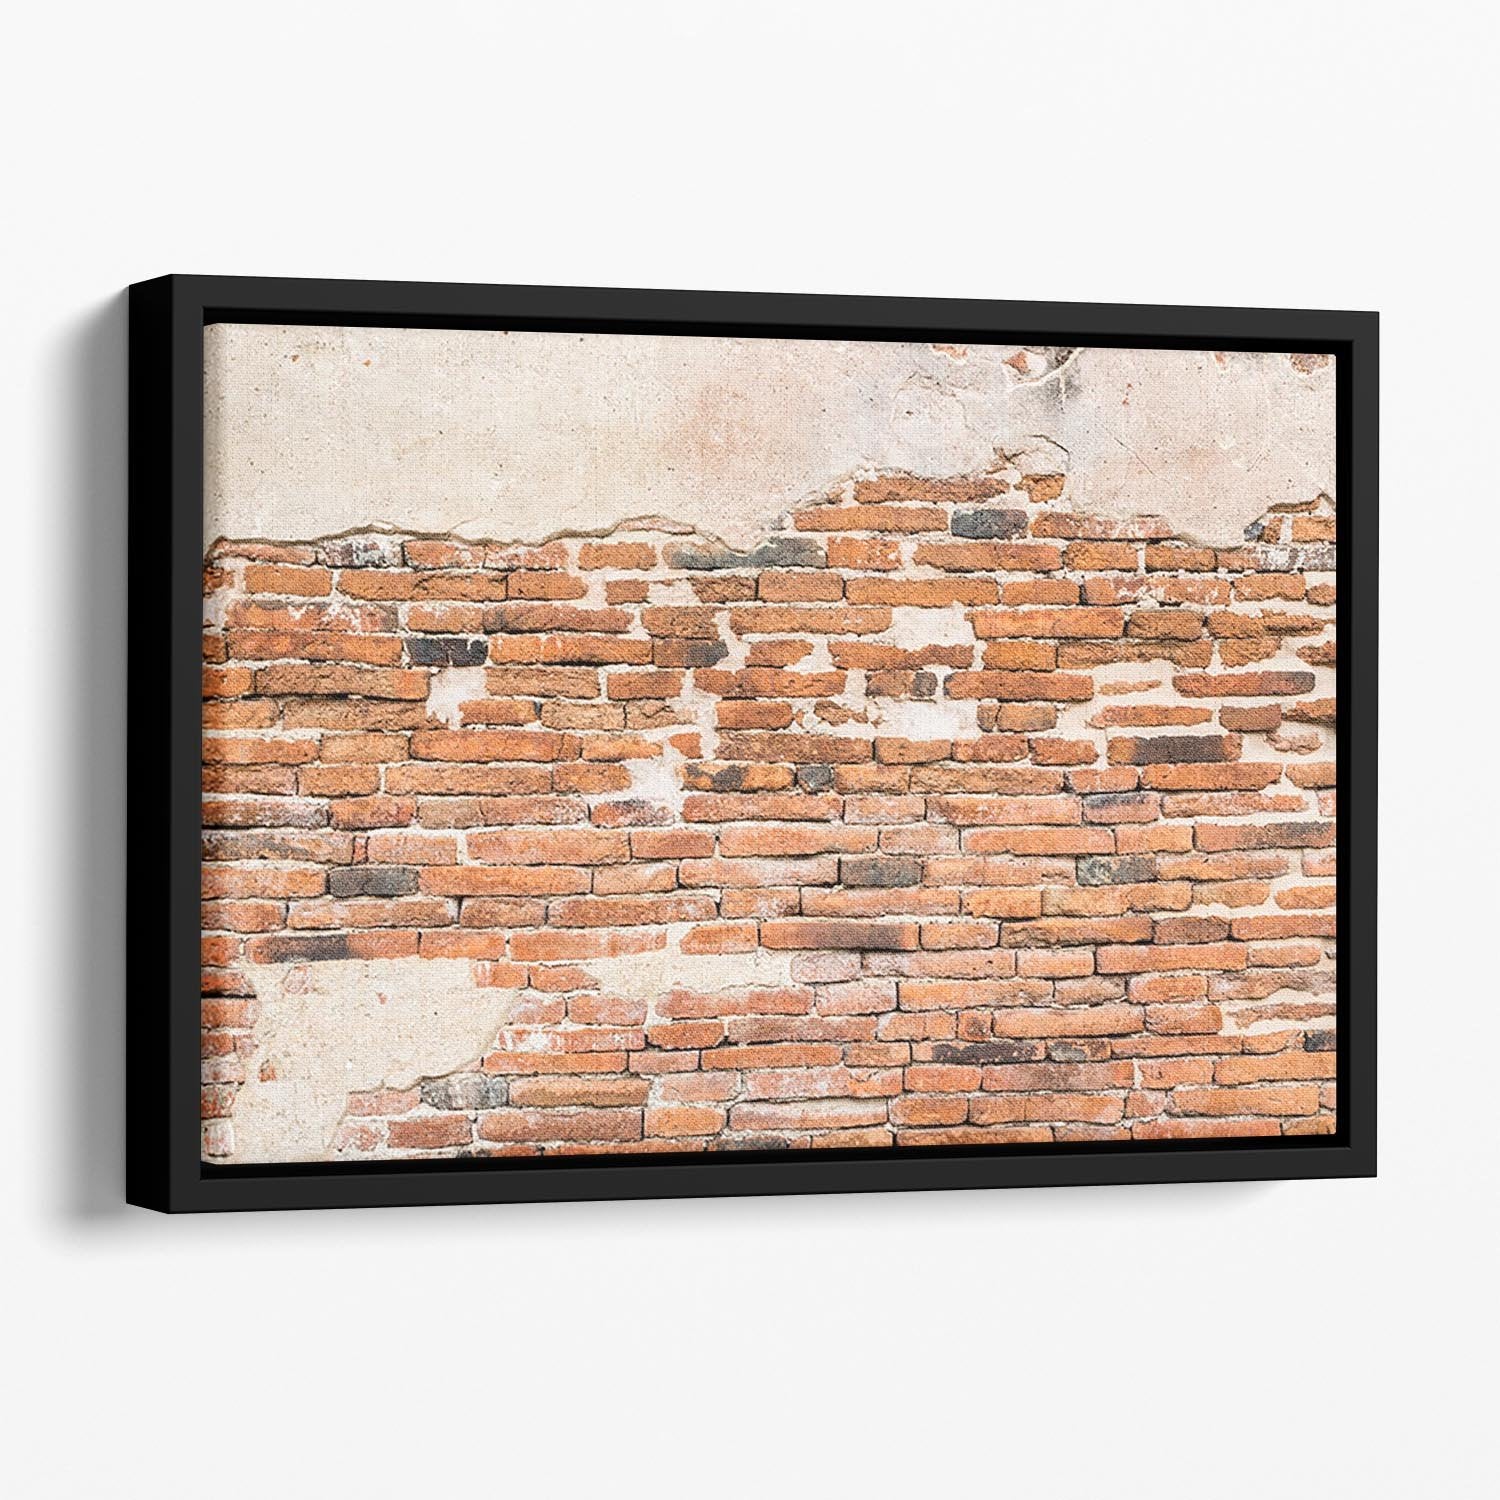 Old brick wall texture Floating Framed Canvas - Canvas Art Rocks - 1